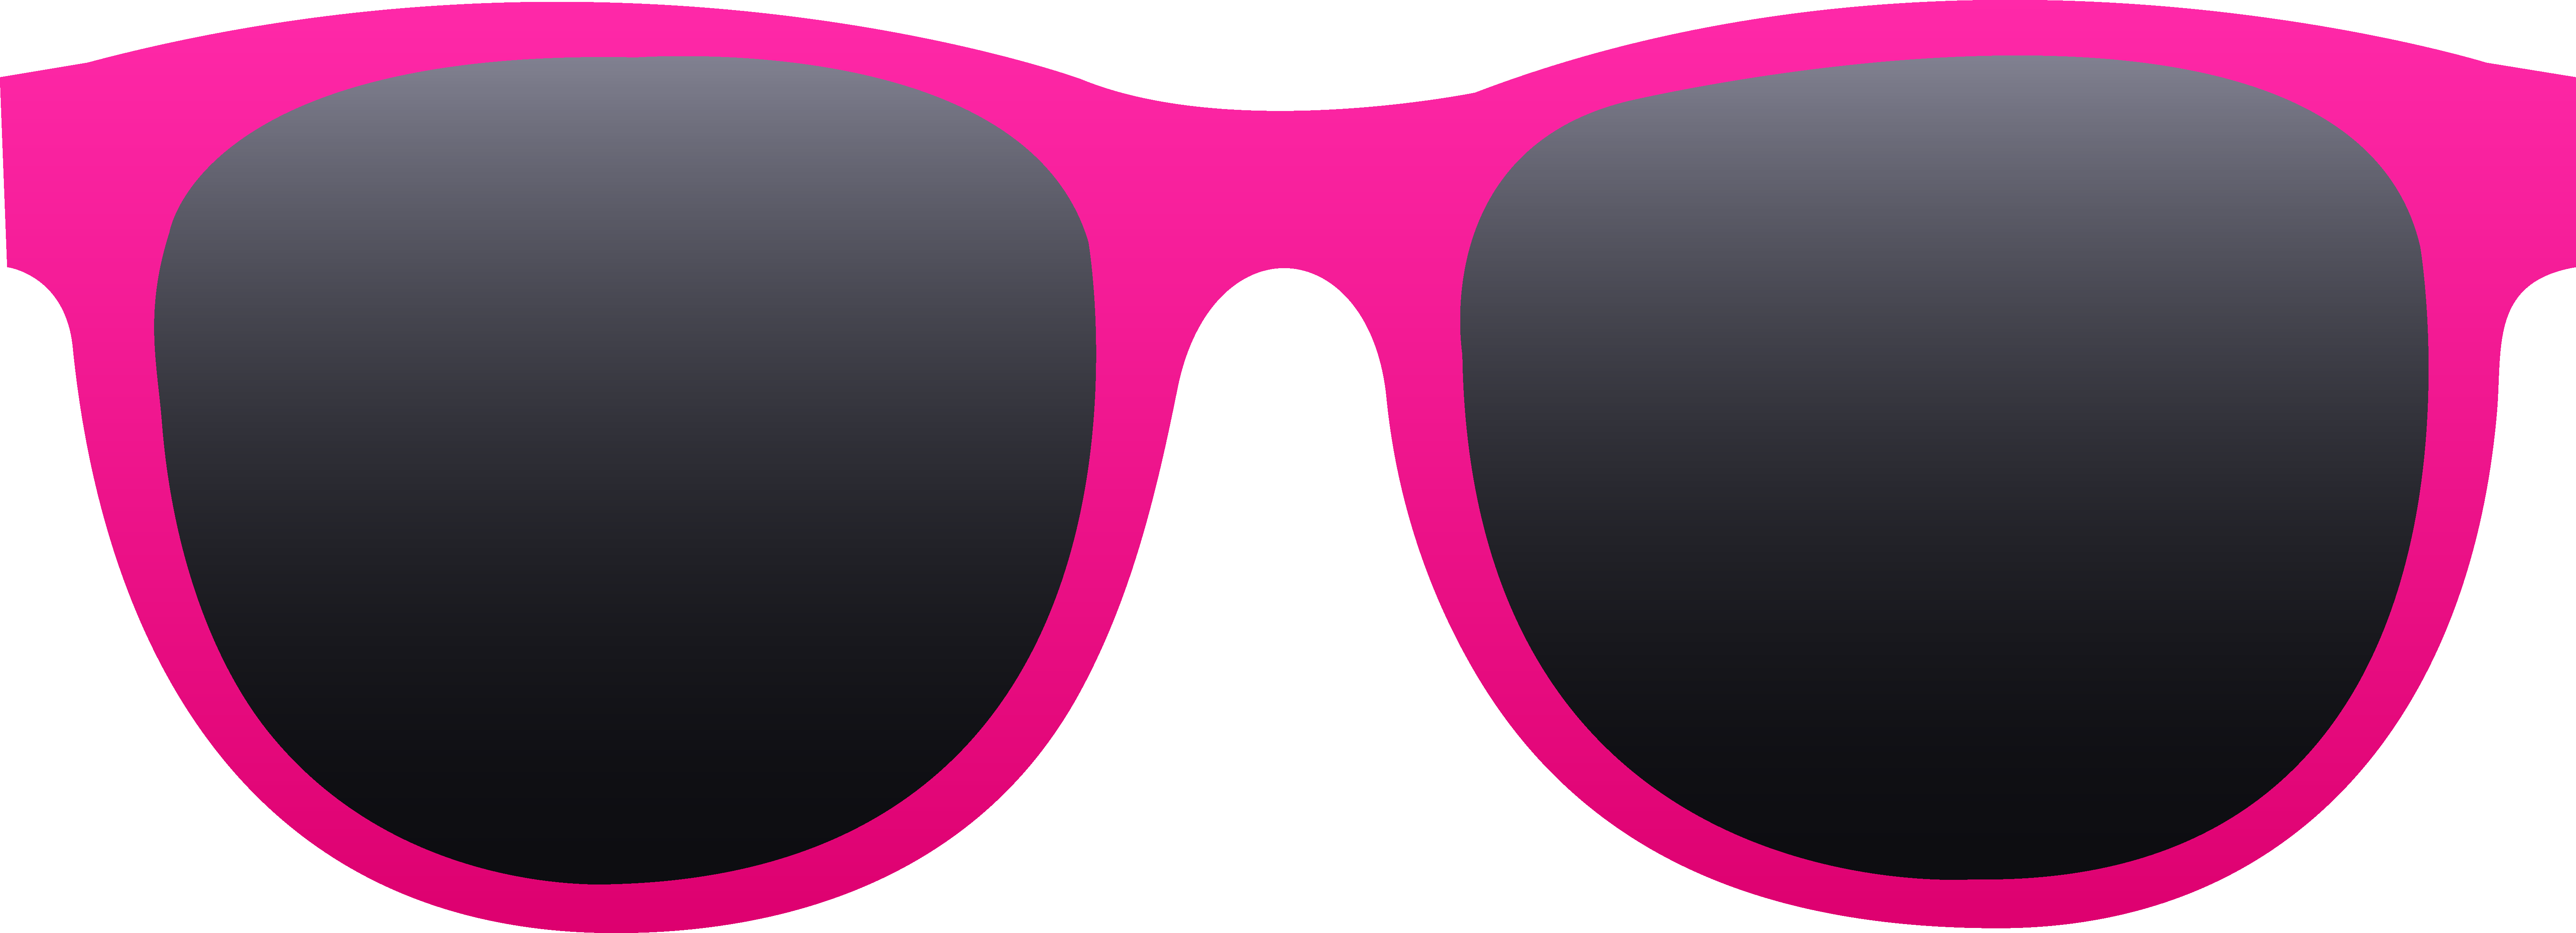 Free Sunglasses Cartoon, Download Free Sunglasses Cartoon png images